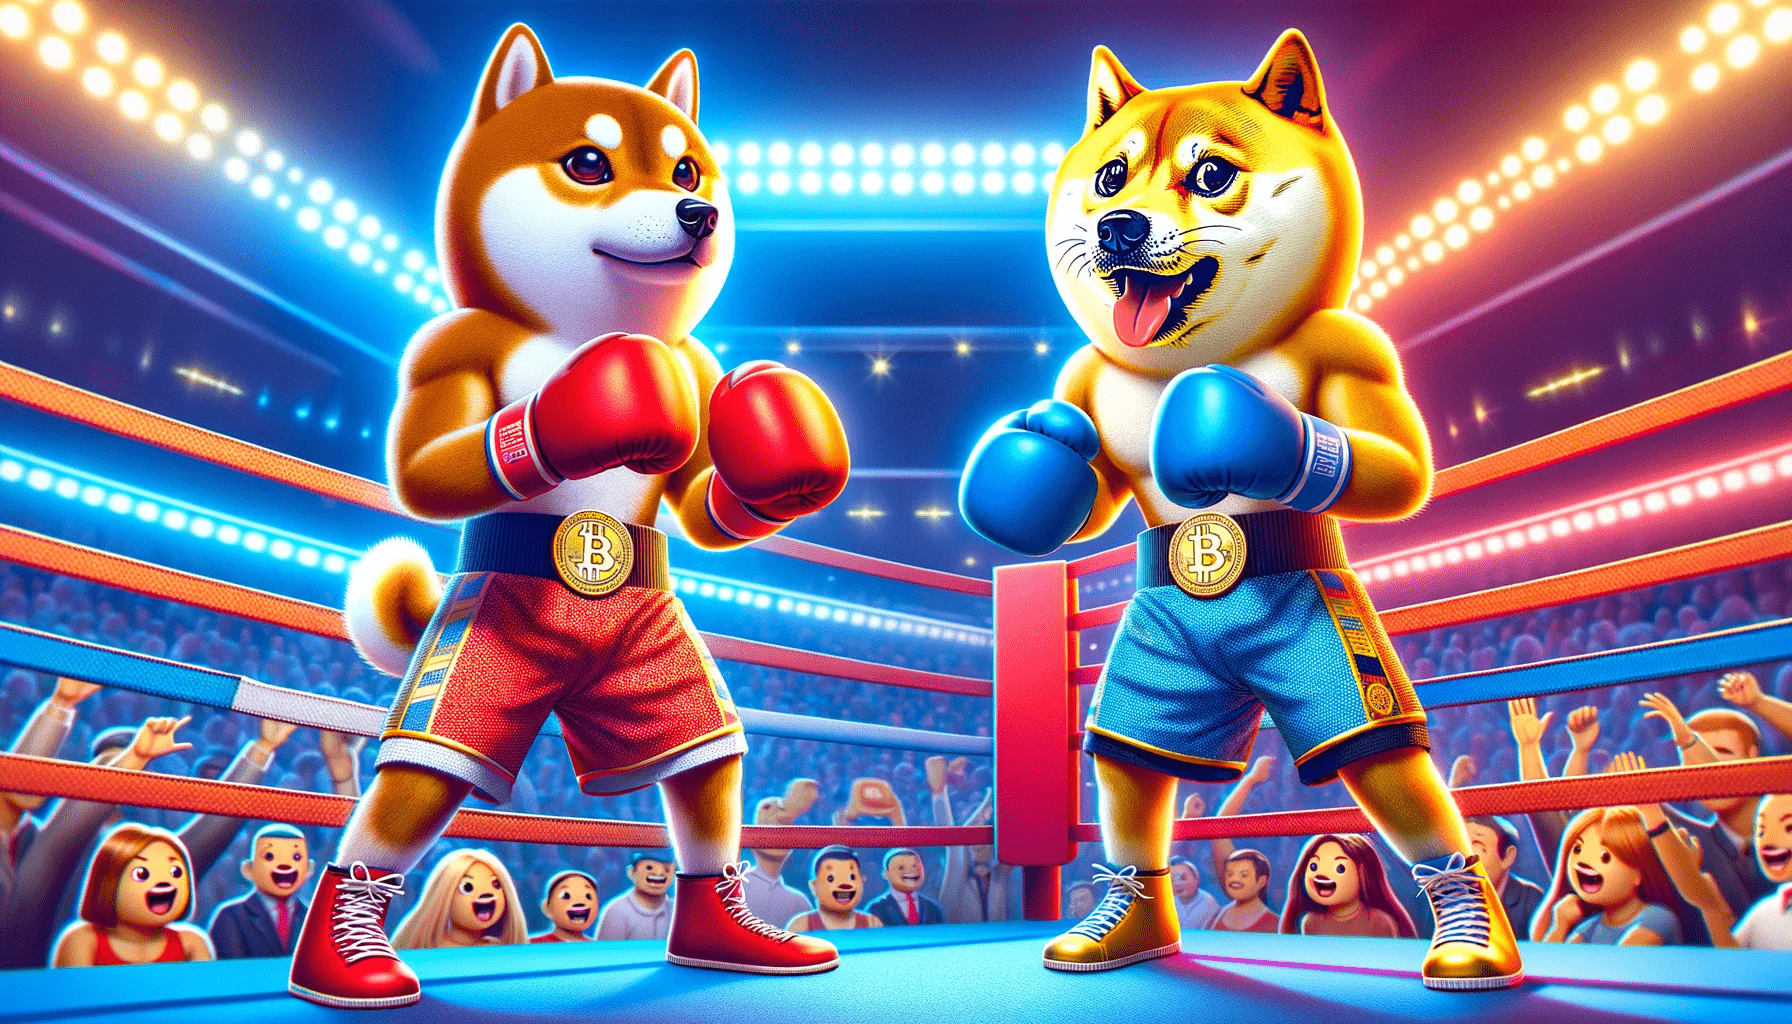 Meme coin mascots Doge and Shiba inu fighting in Meme Kombat Arena